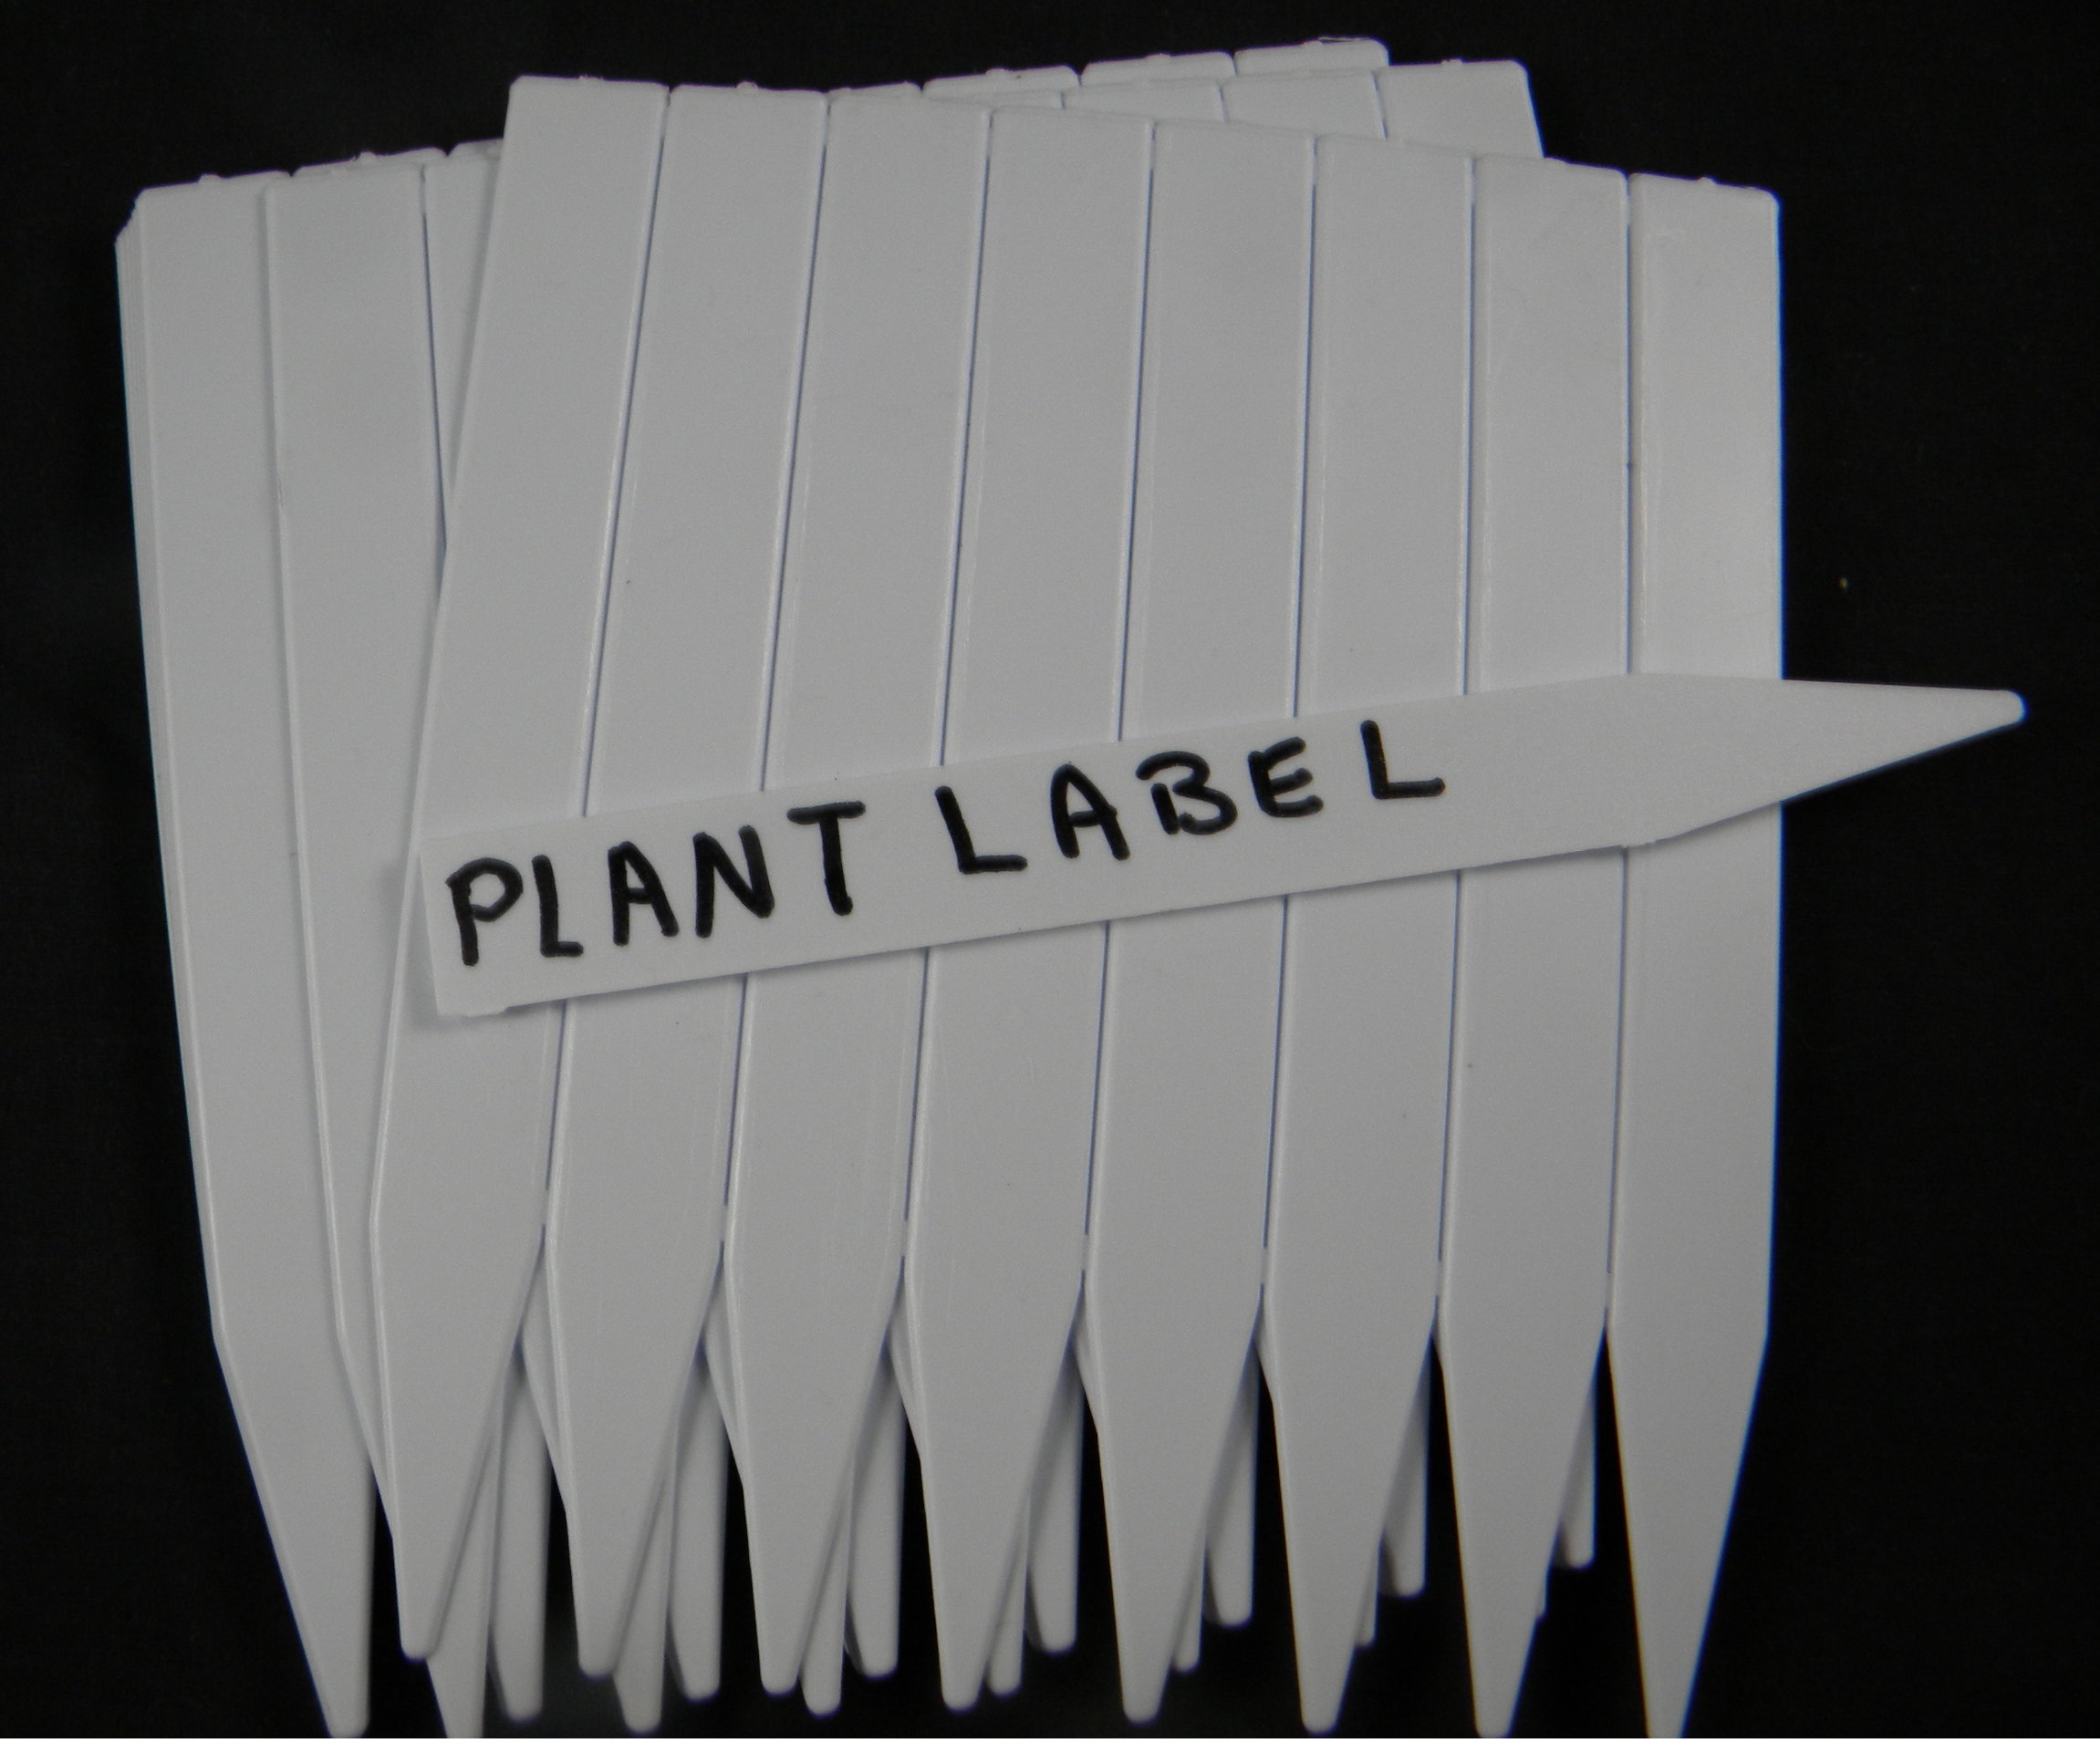 Plant Label